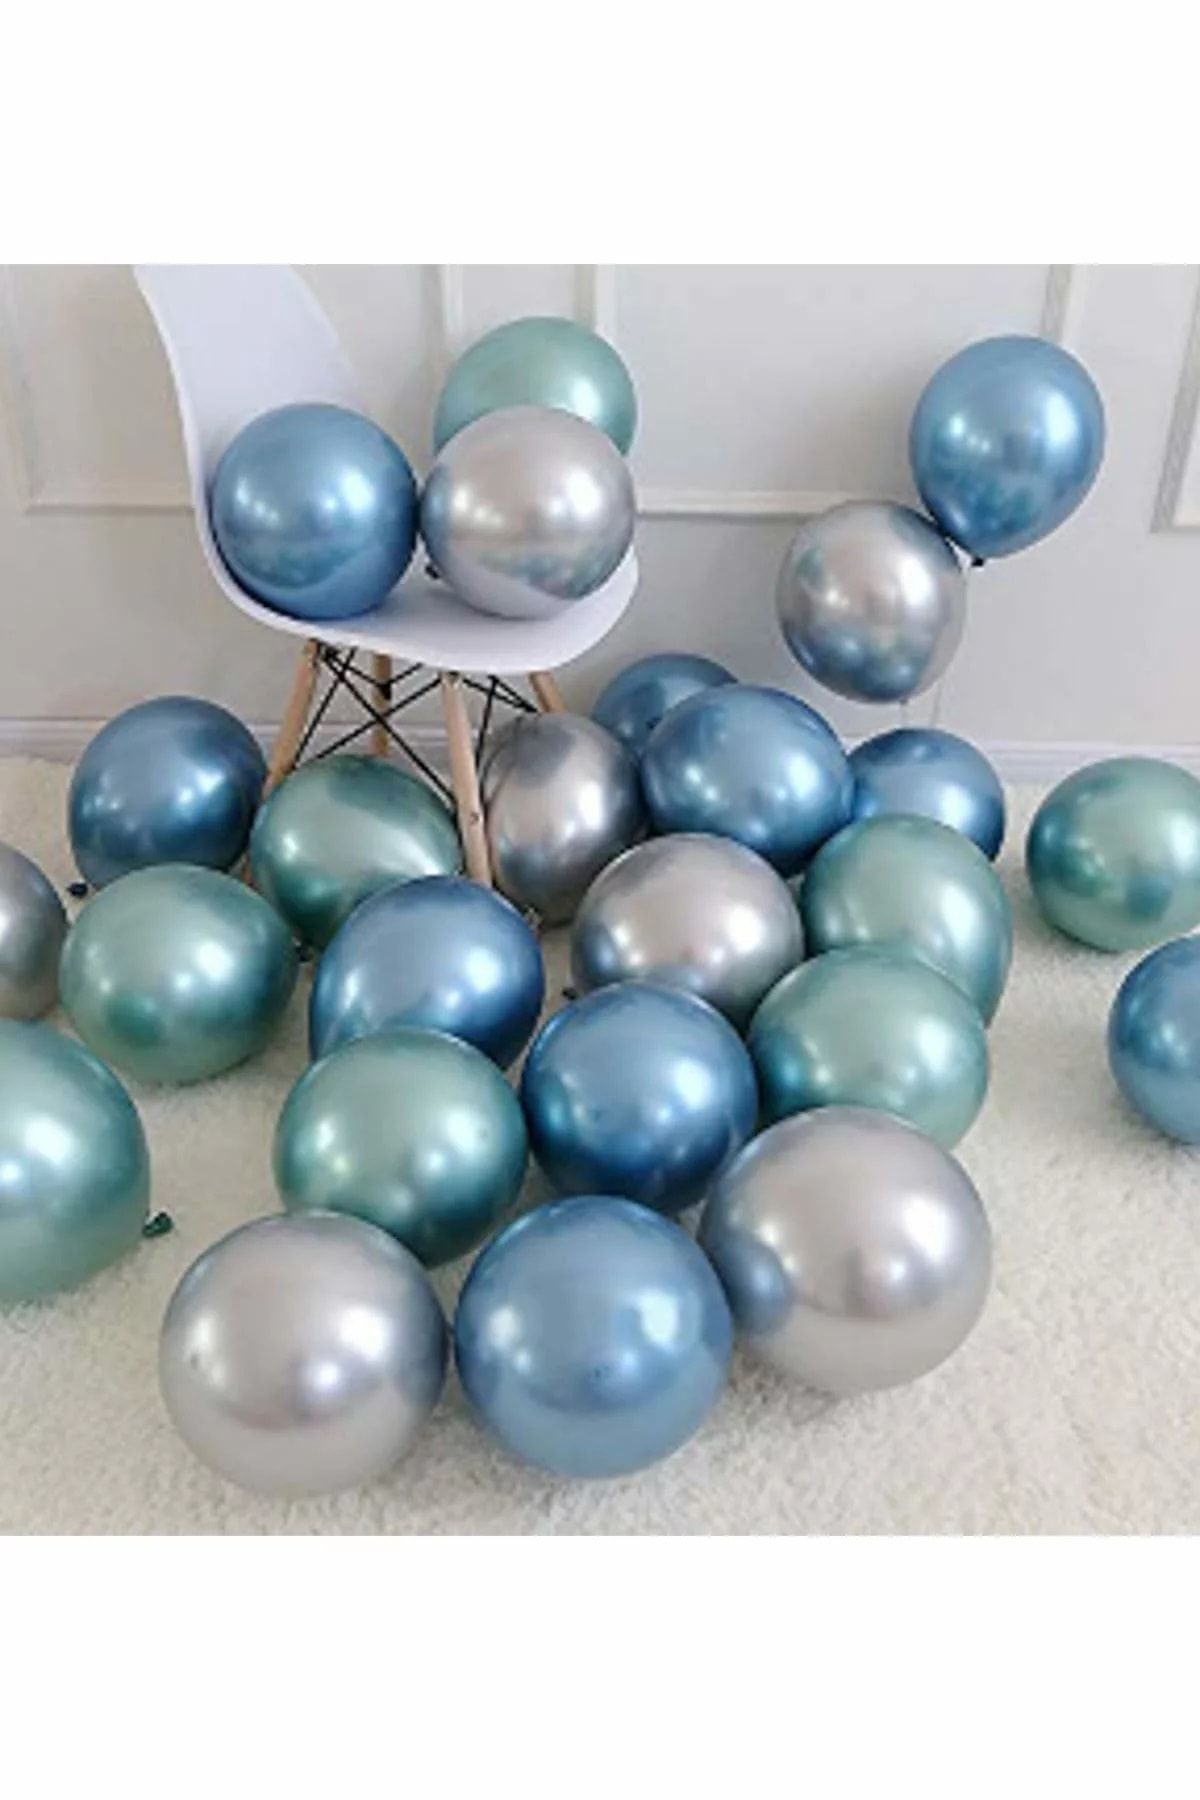 Parti Dolabı Krom Parlak Metalik Yeşil-Mavi-Gümüş Renk 20'Li Balon ( 3'Lü Renk Seti ) 10020Krmb